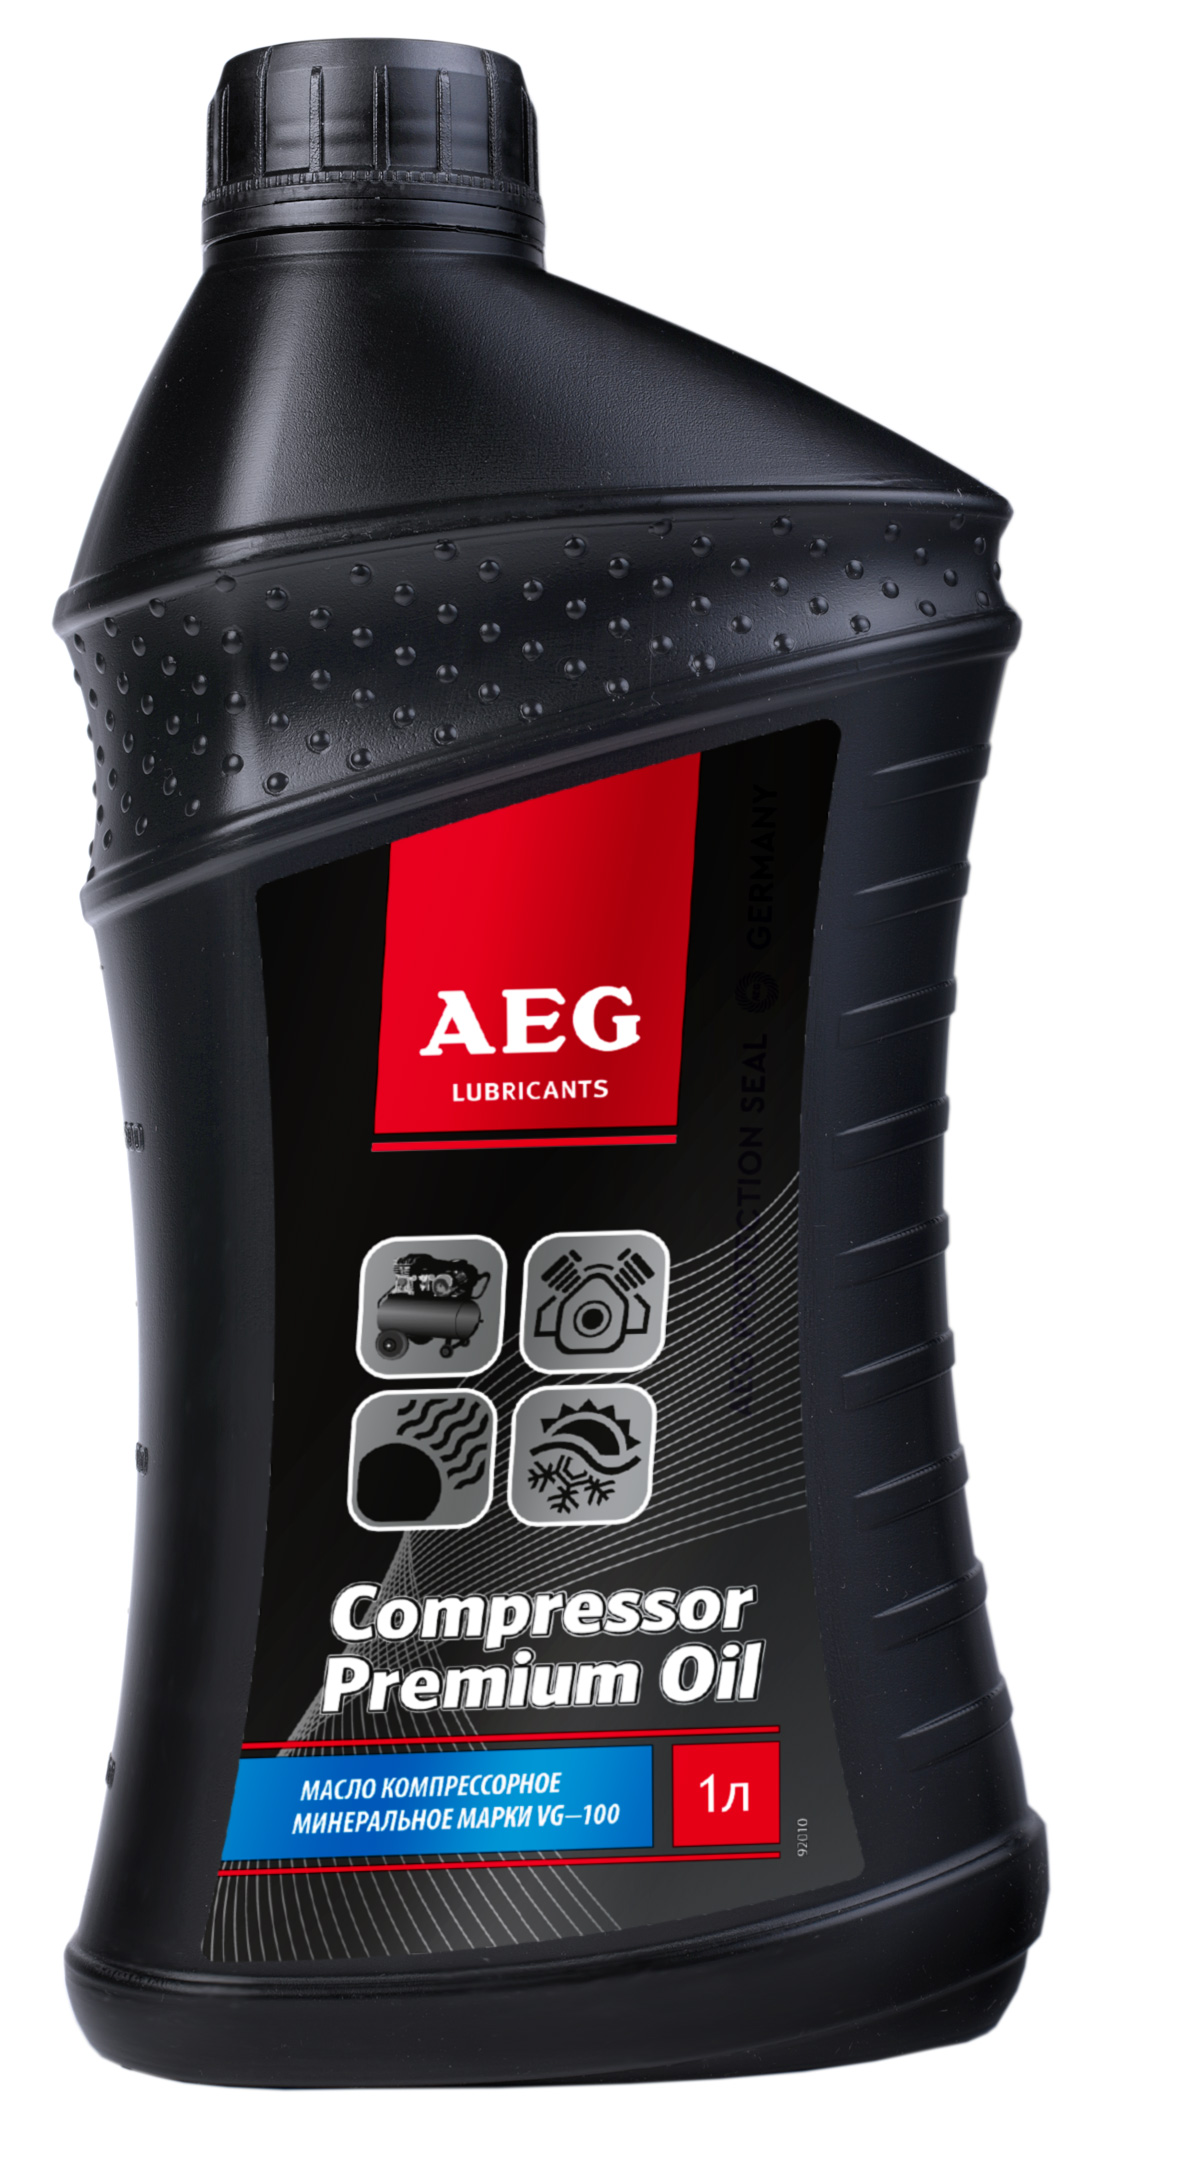 Масло компрессорное AEG Premium Compressor (1л.)